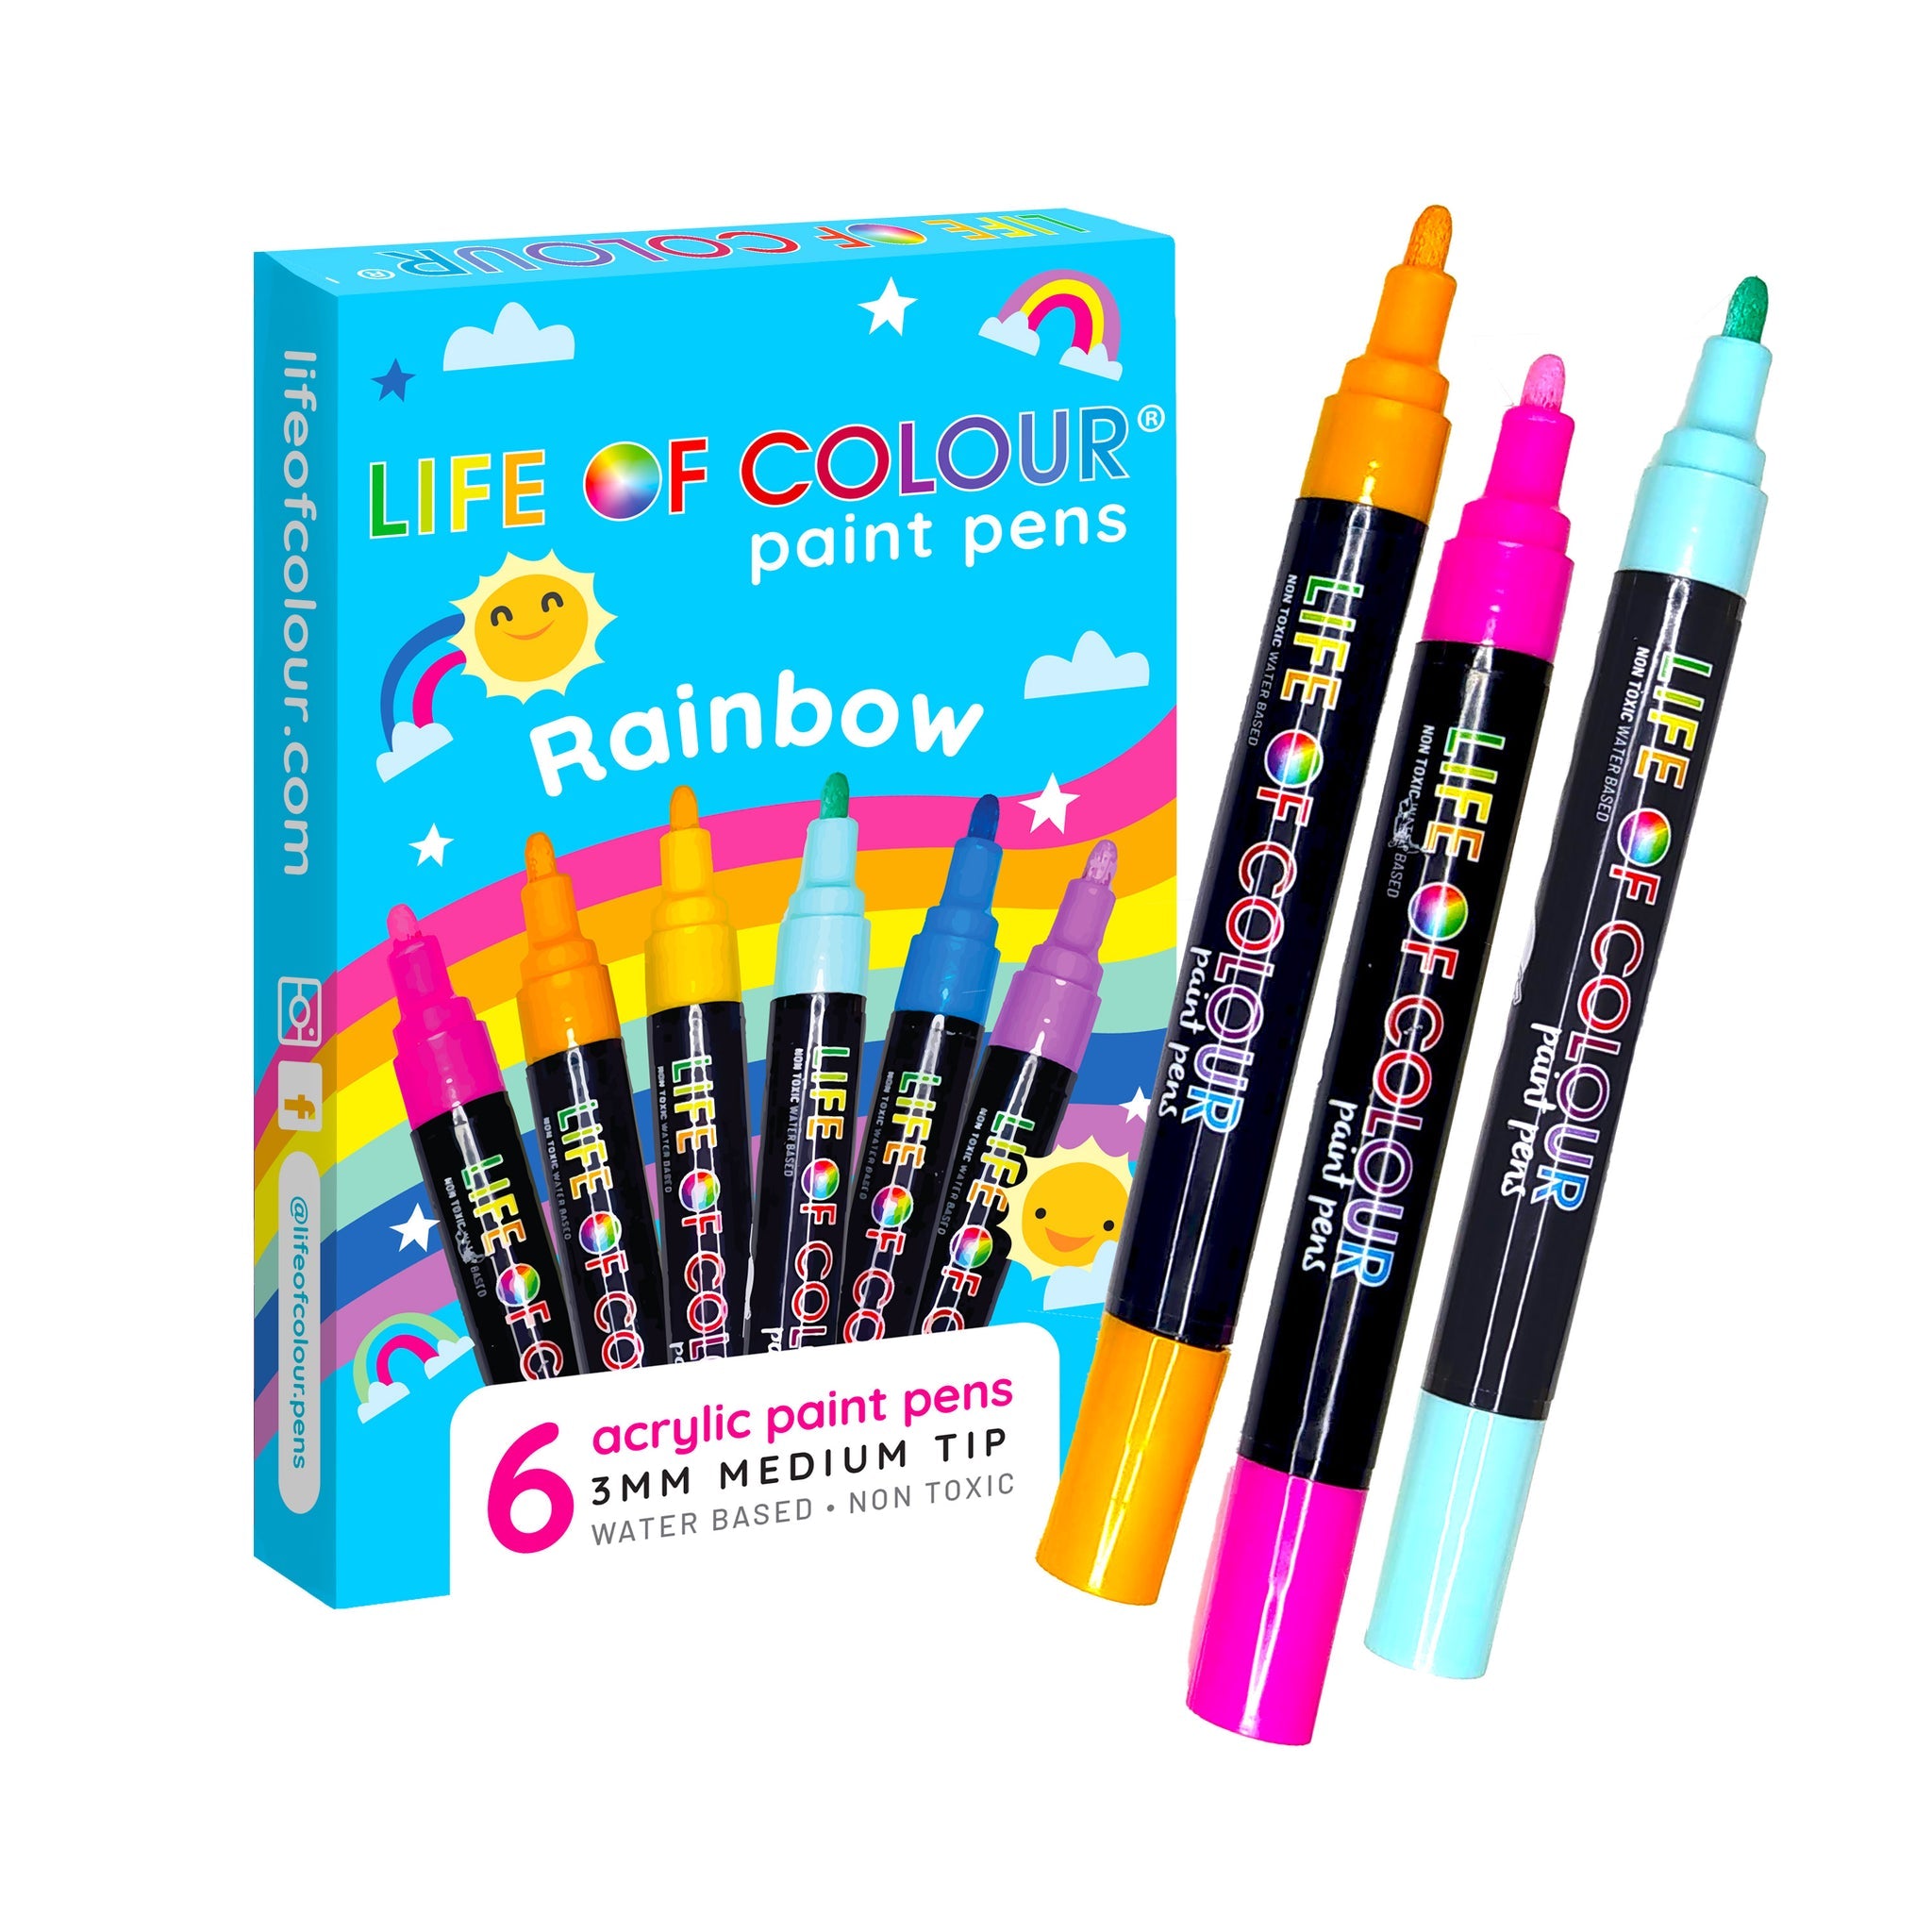 Life of Colour Paint Pens Rainbow 3mm